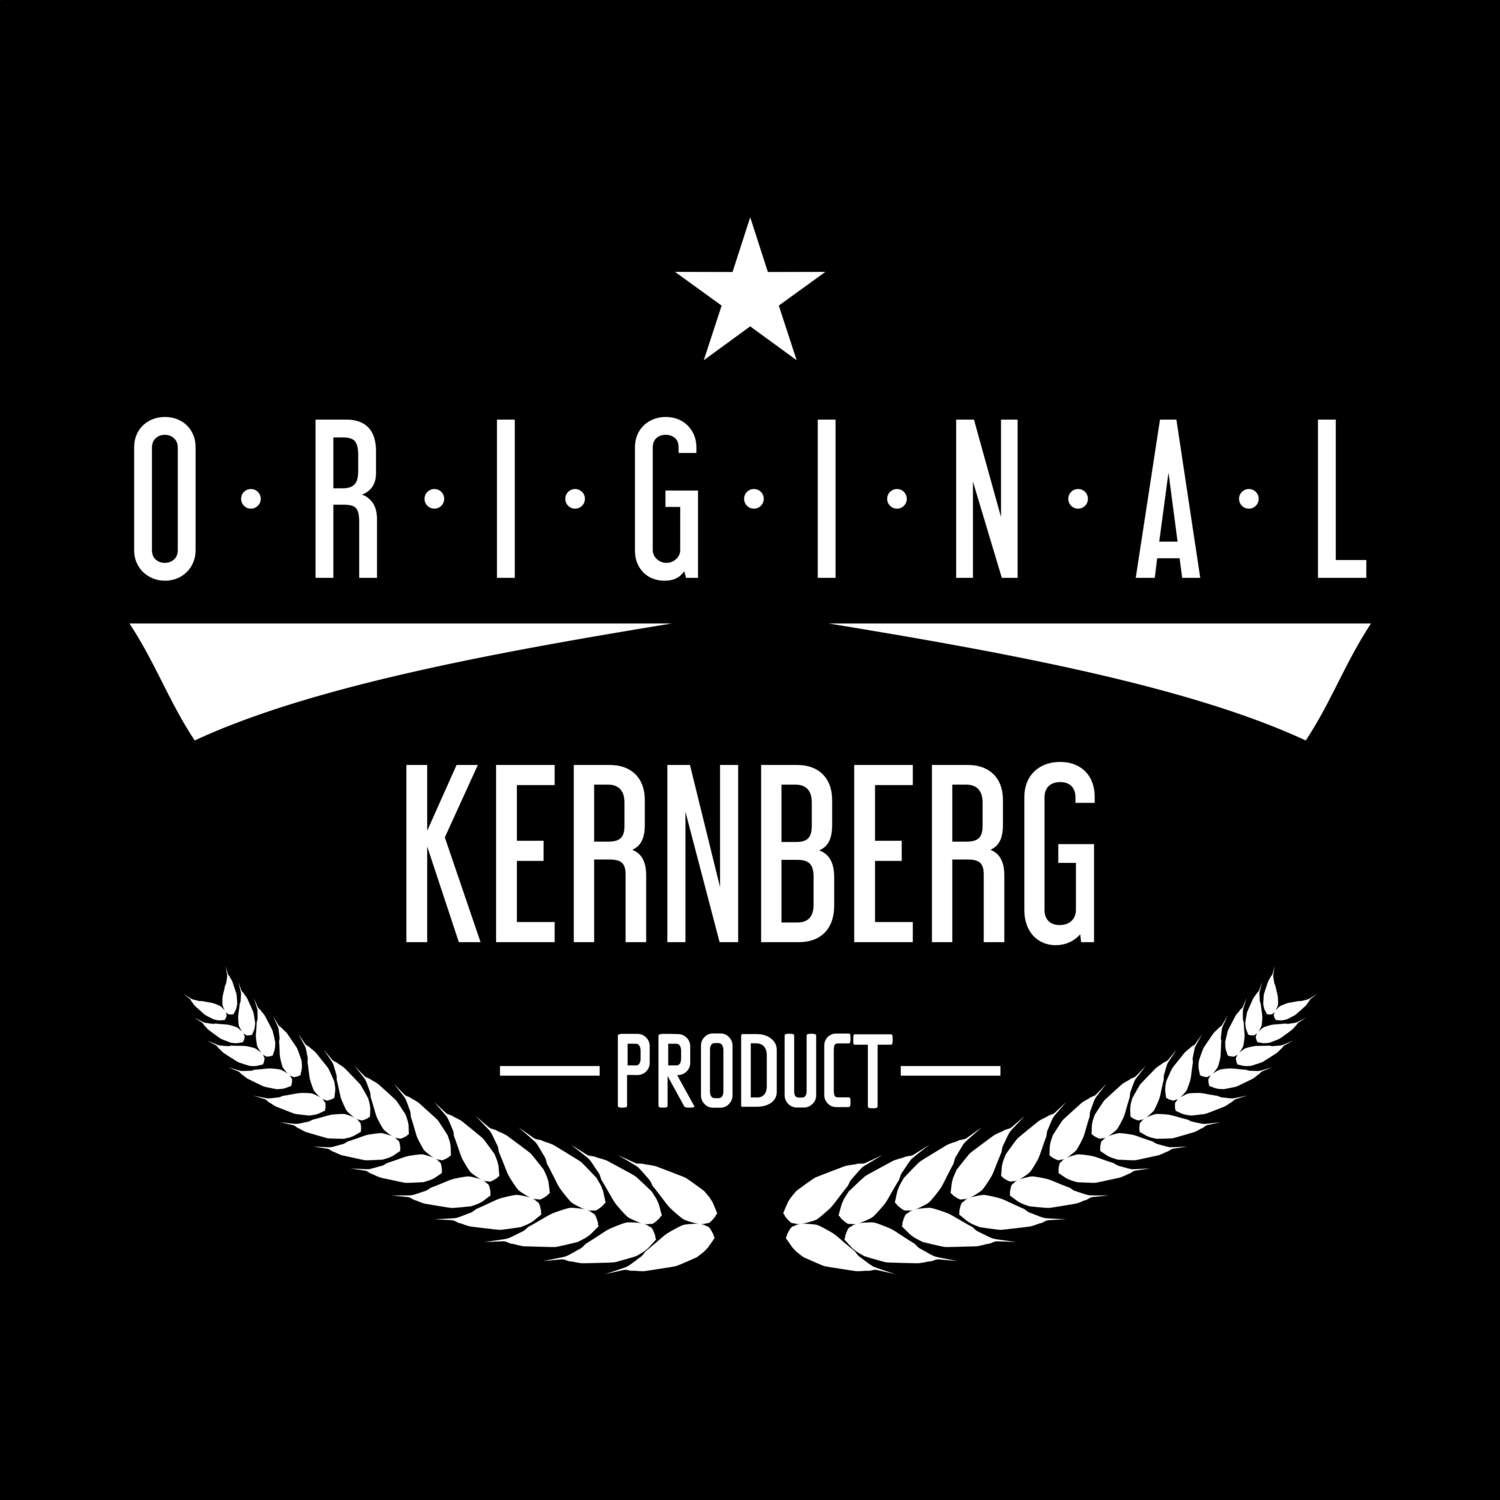 Kernberg T-Shirt »Original Product«